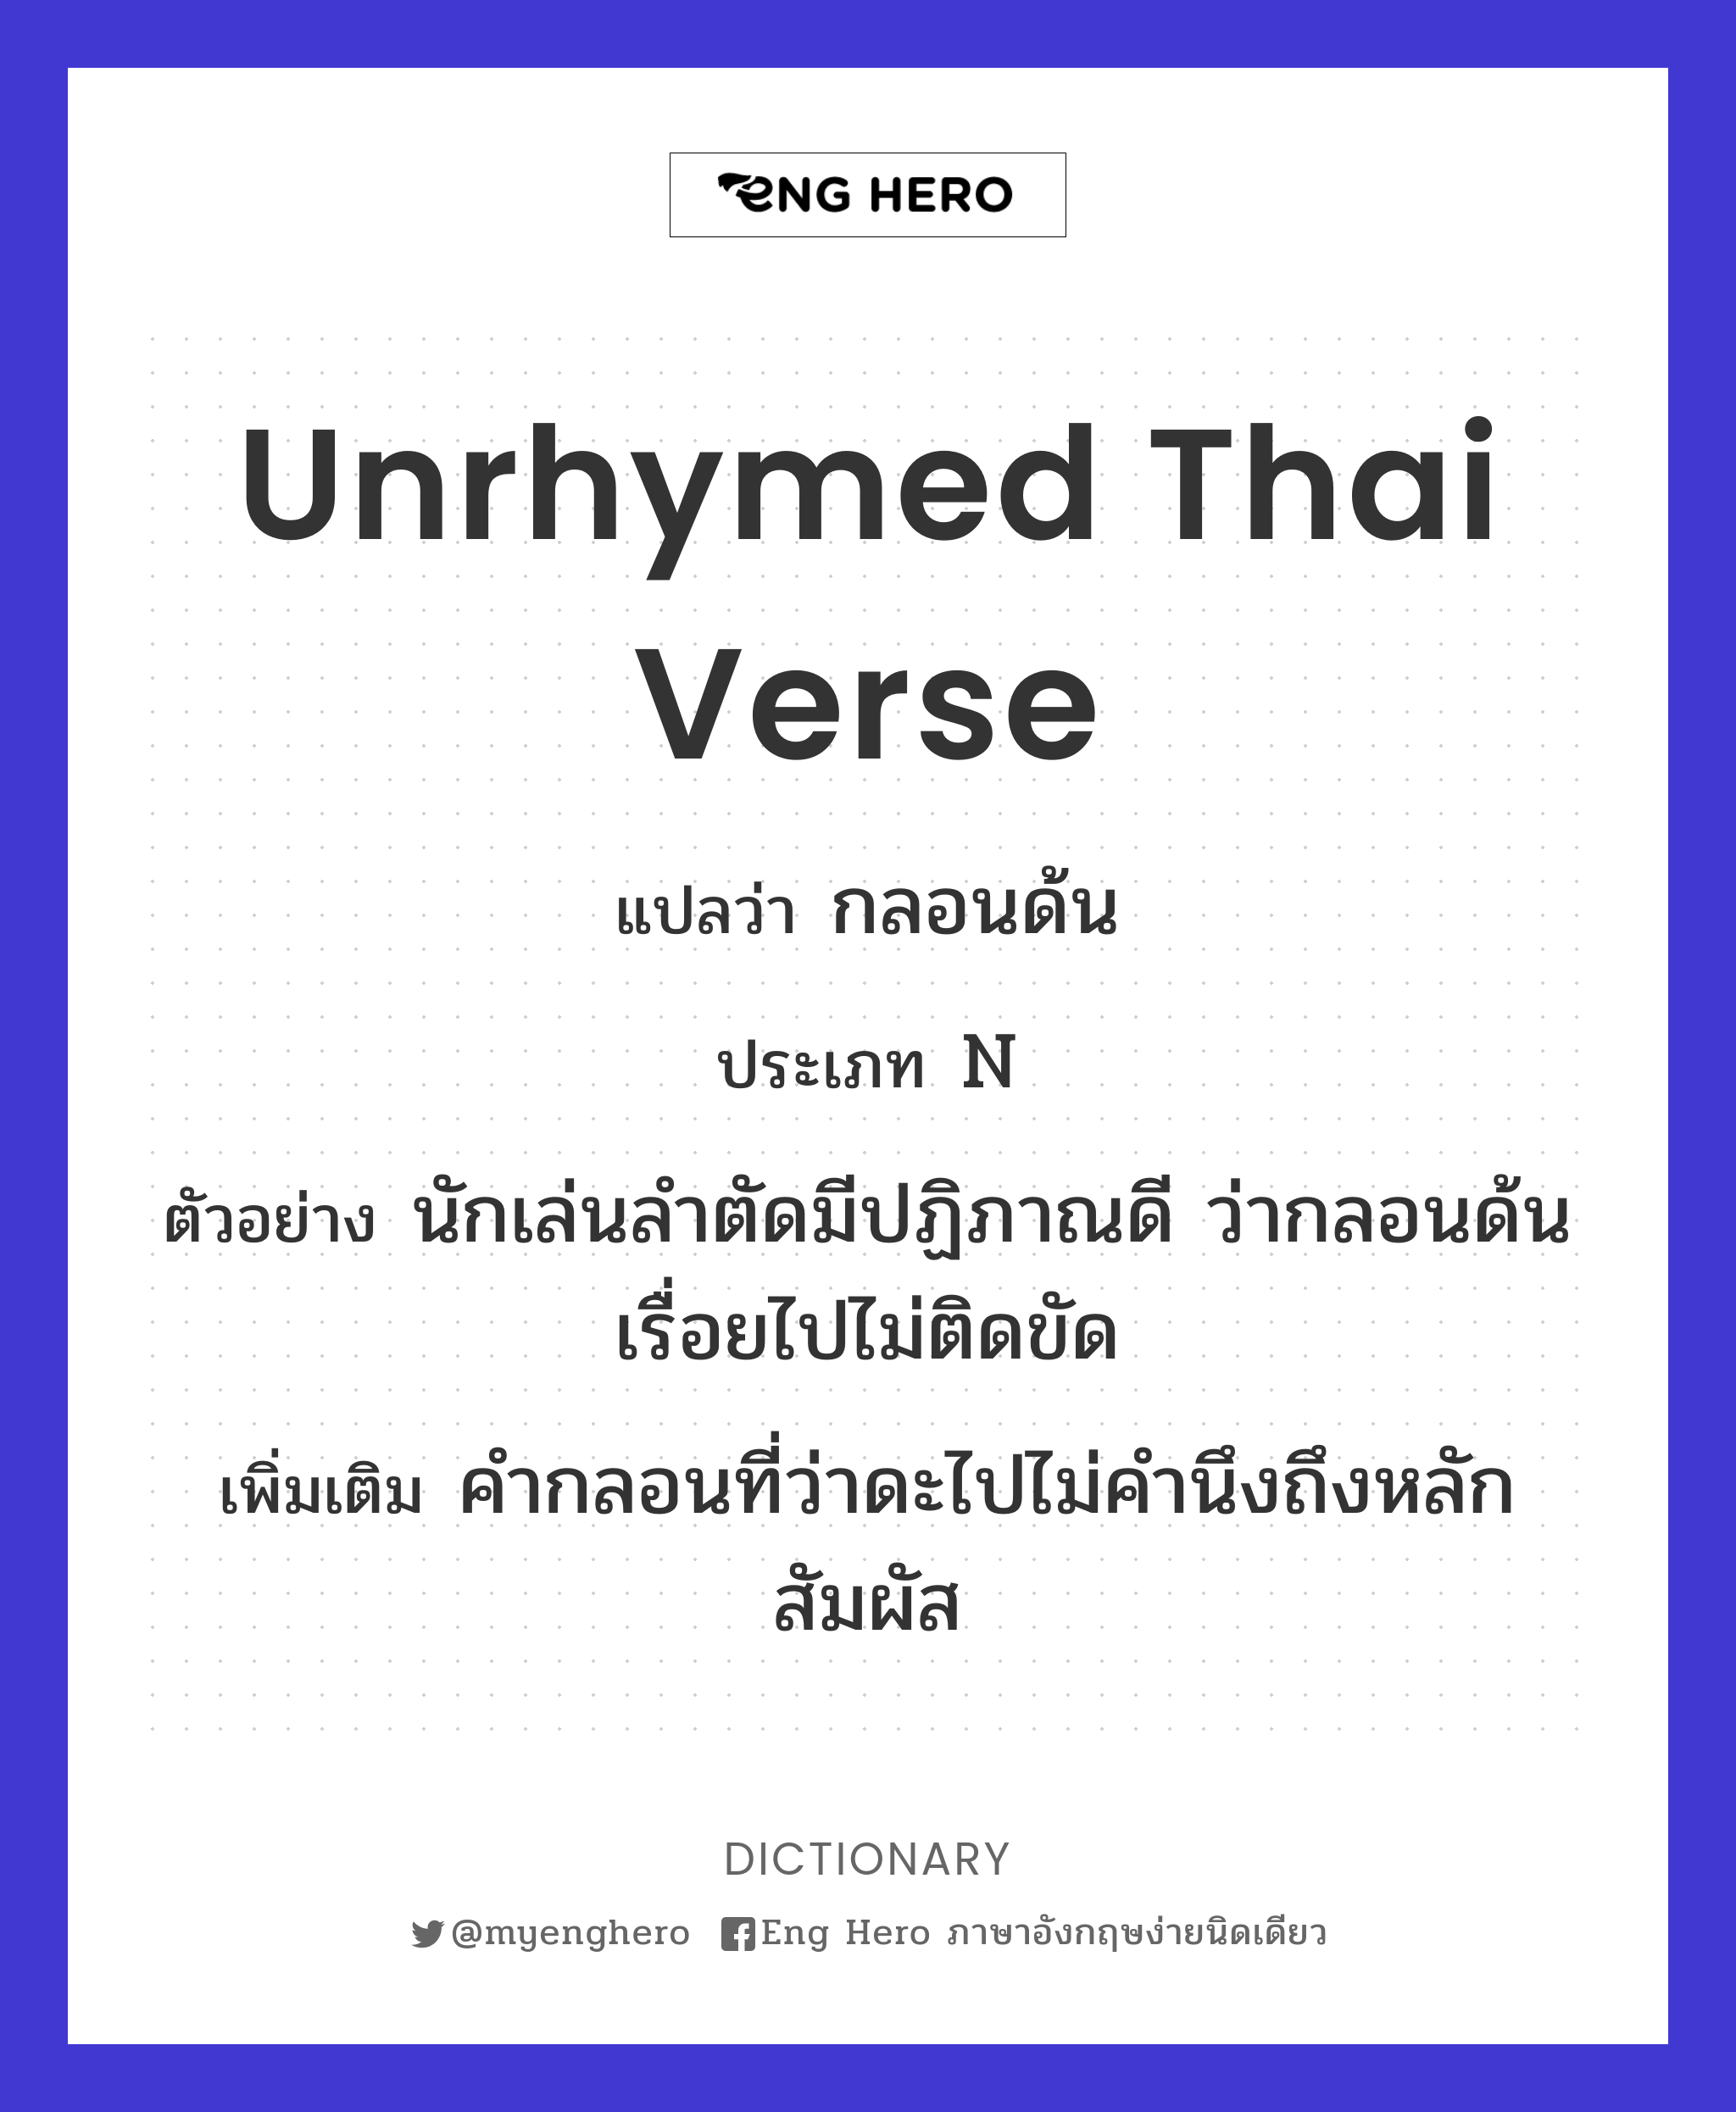 unrhymed Thai verse